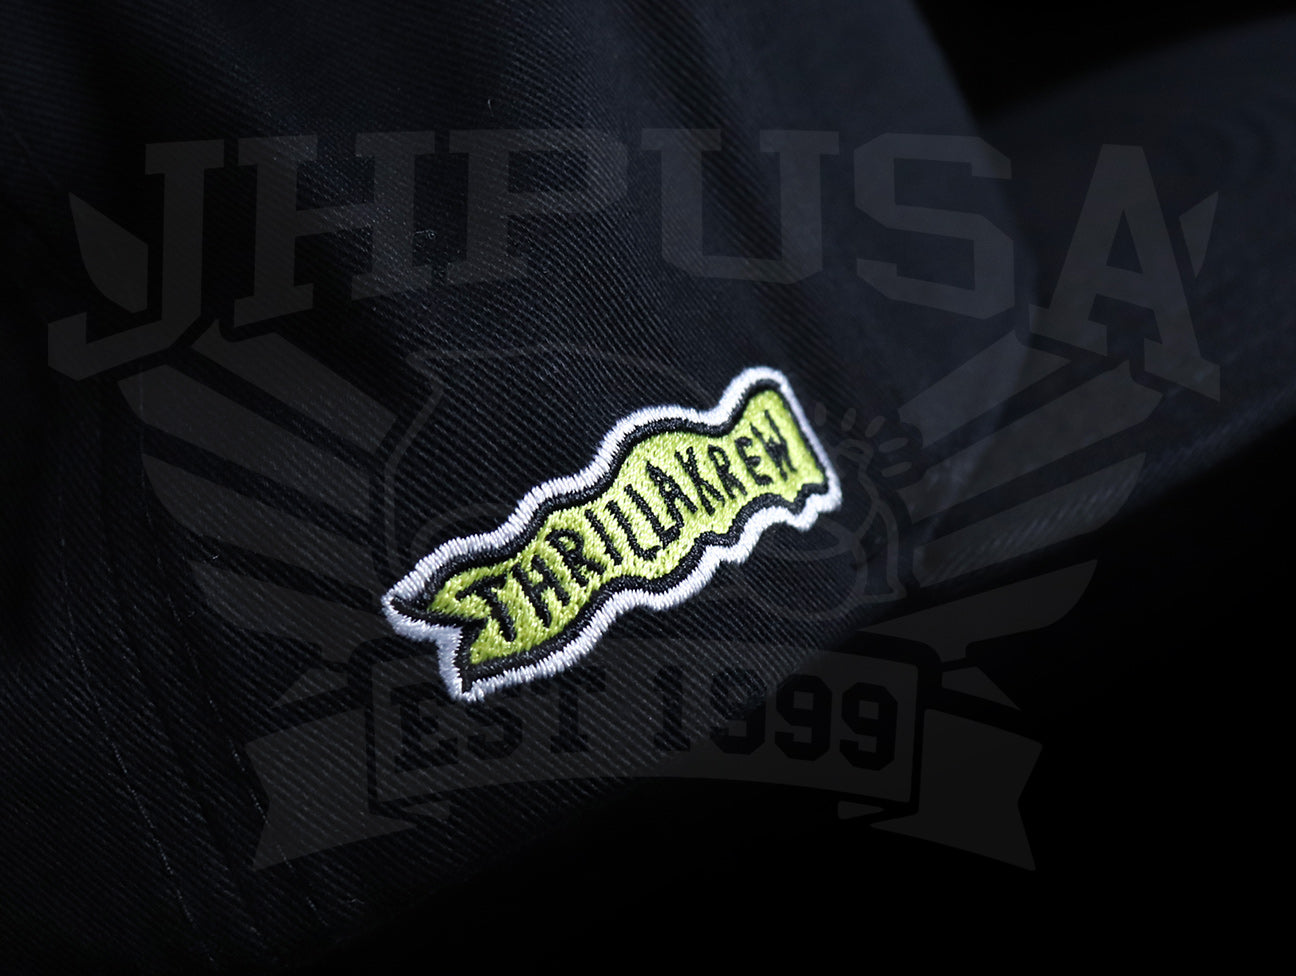 Thrilla Krew Dot Logo Snapback Cap - Black